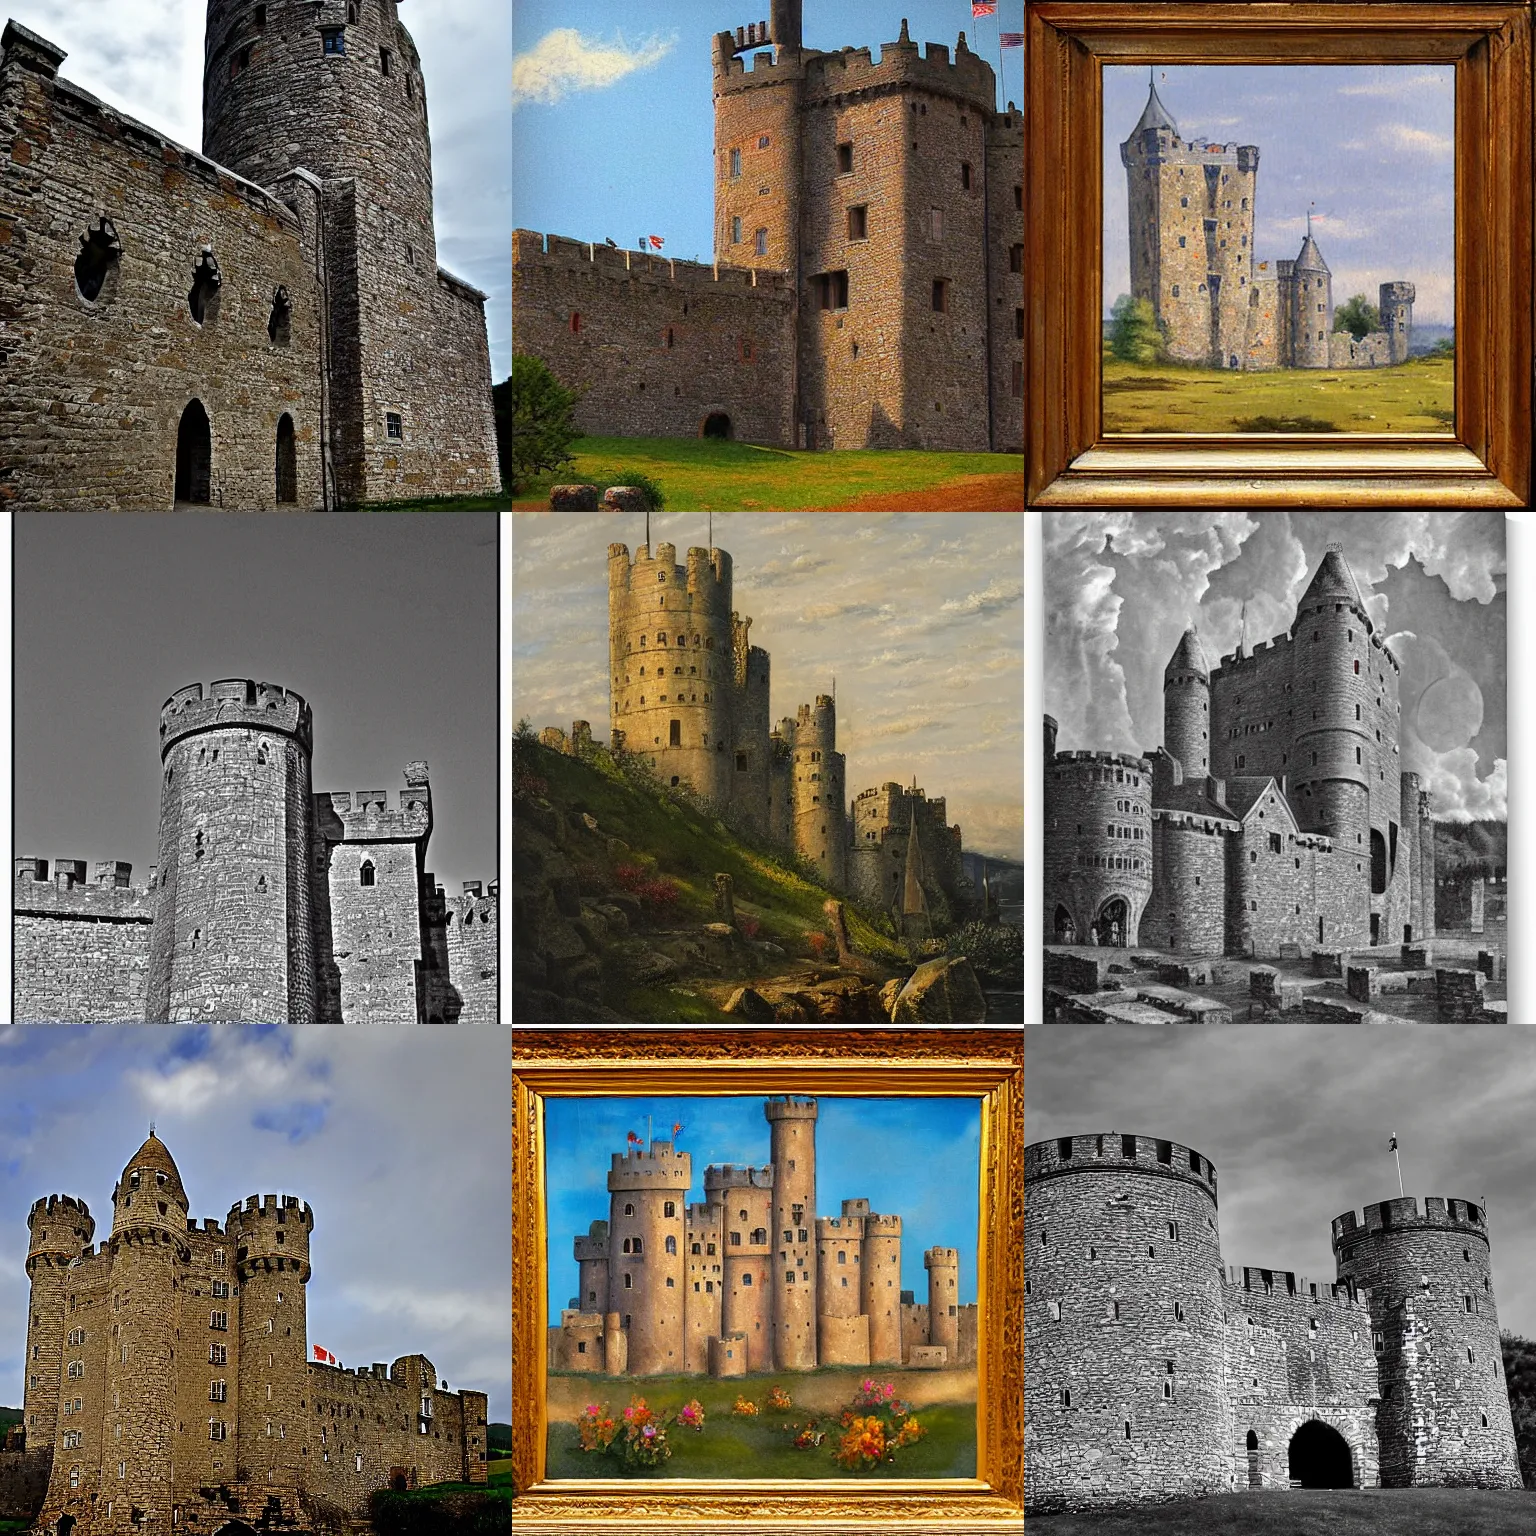 Prompt: medieval castle, by george biddle